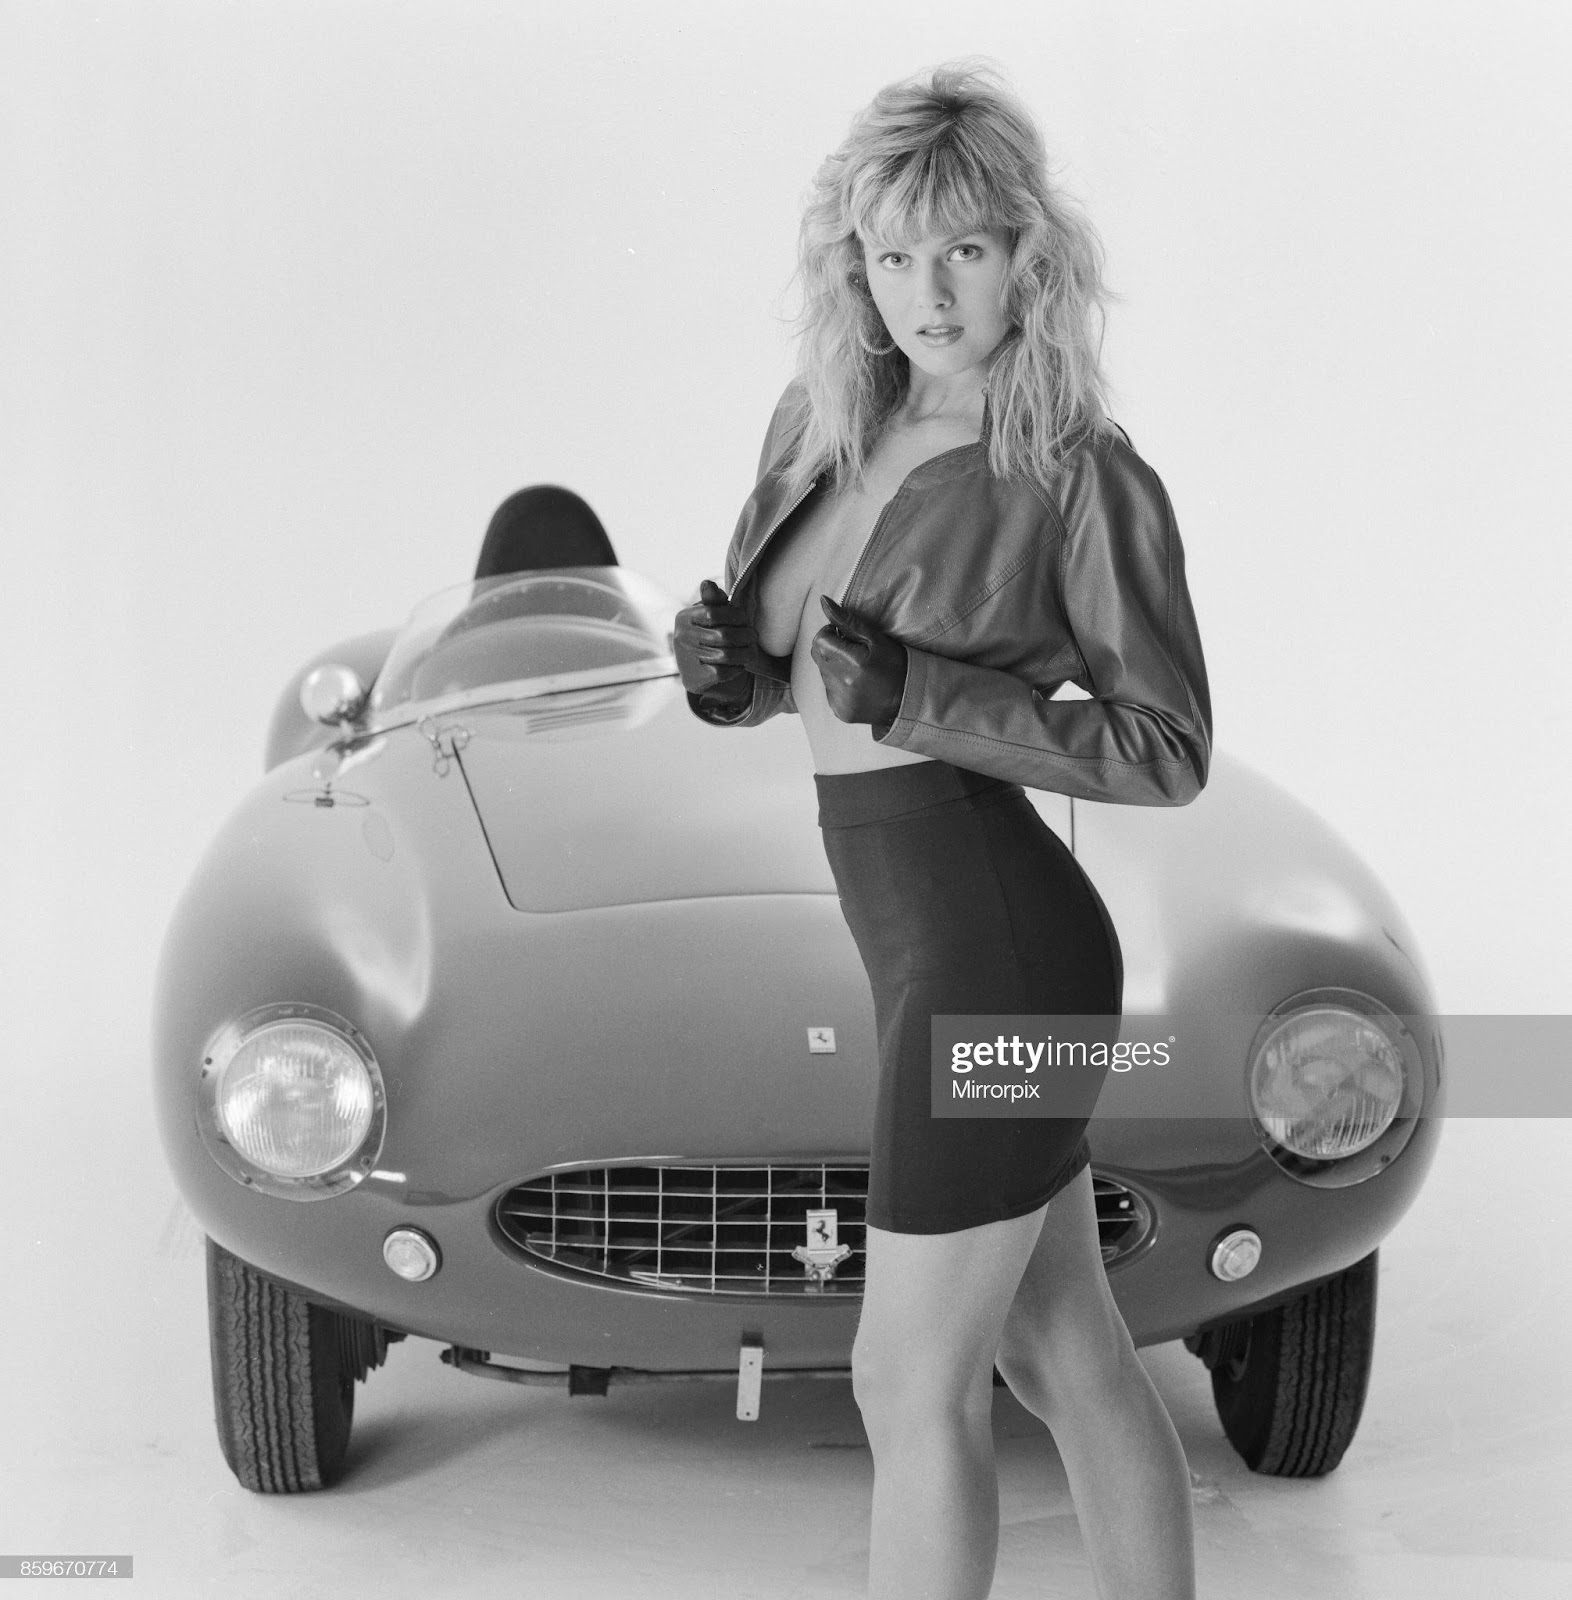 D:\Documenti\posts\posts\Women and motorsport\foto\1988\glamour-model-caroline-delahunty-poses-next-to-a-ferrari-19th-april-picture-id859670774.jpg